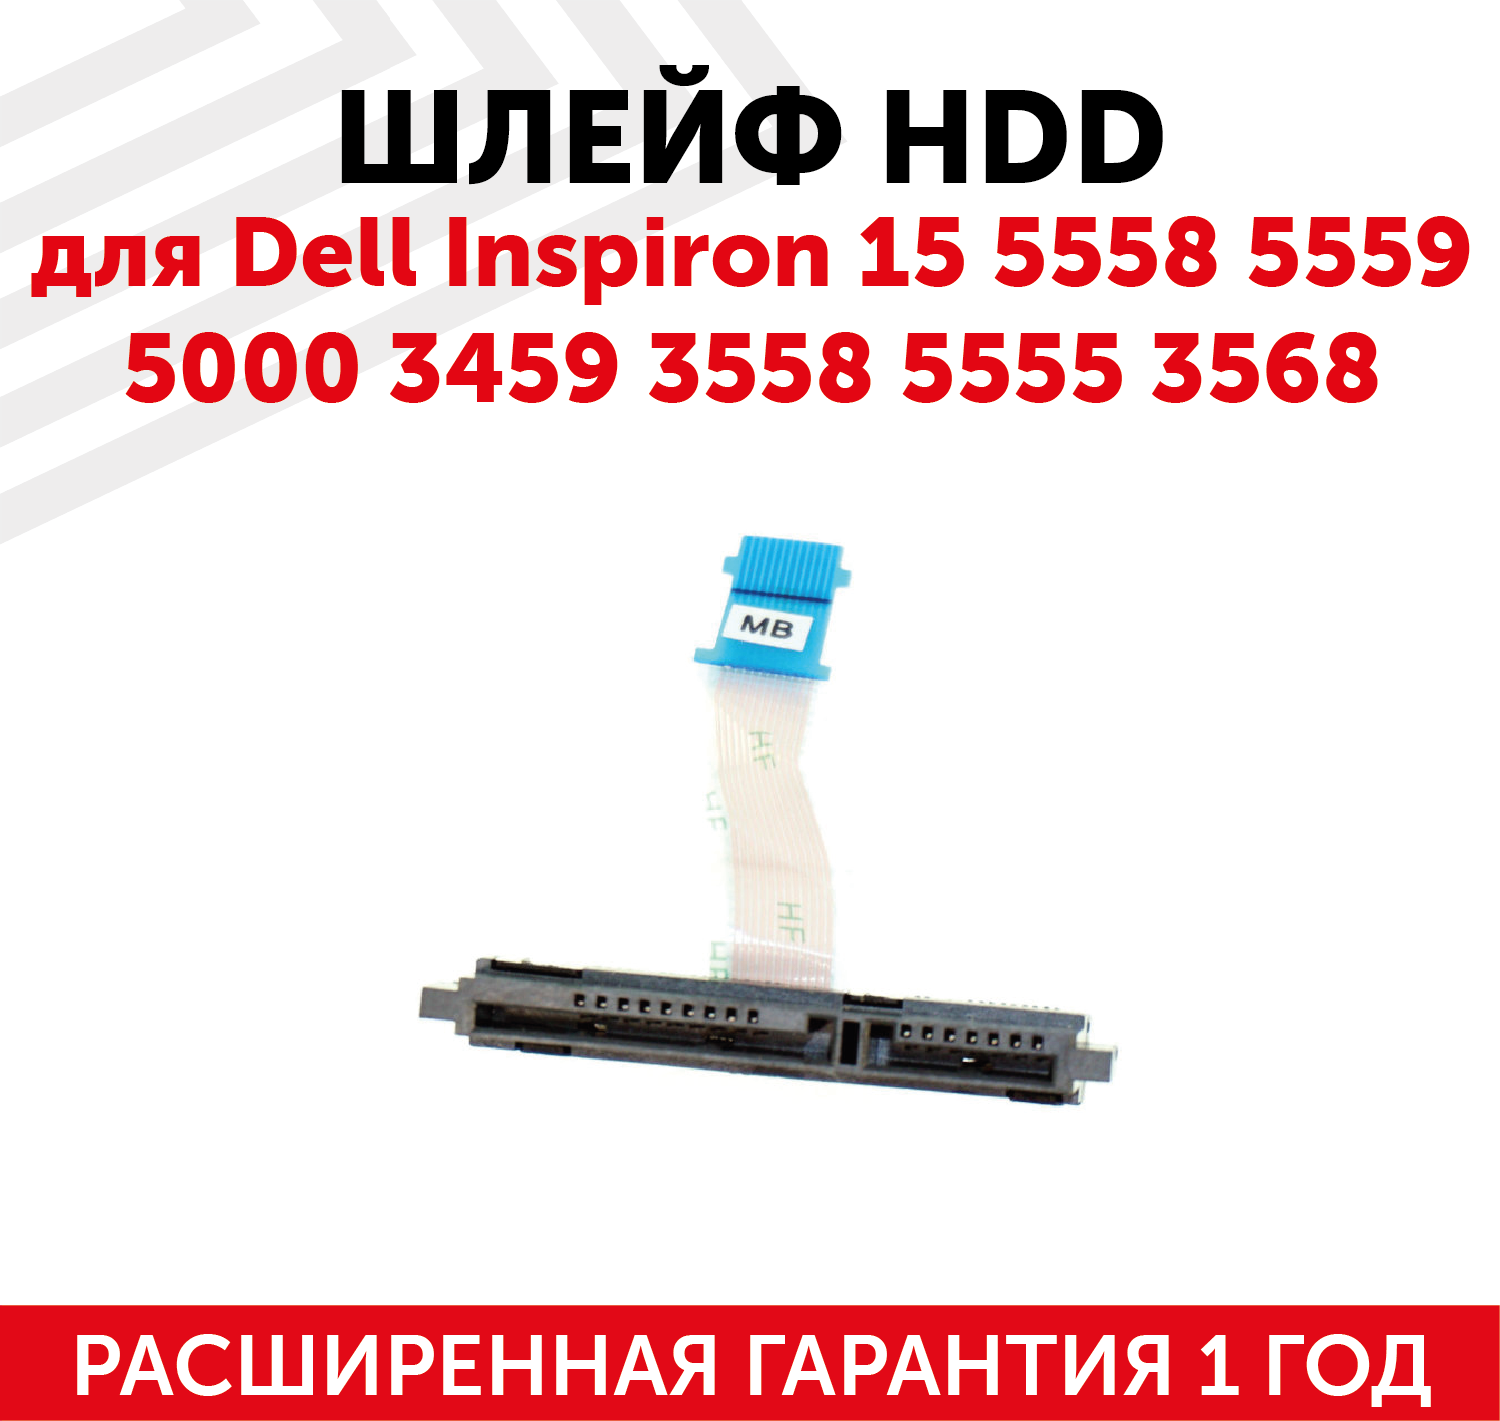 Шлейф жесткого диска для ноутбука Dell Inspiron 15 5558 5559 5000 3459 3558 5555 3568